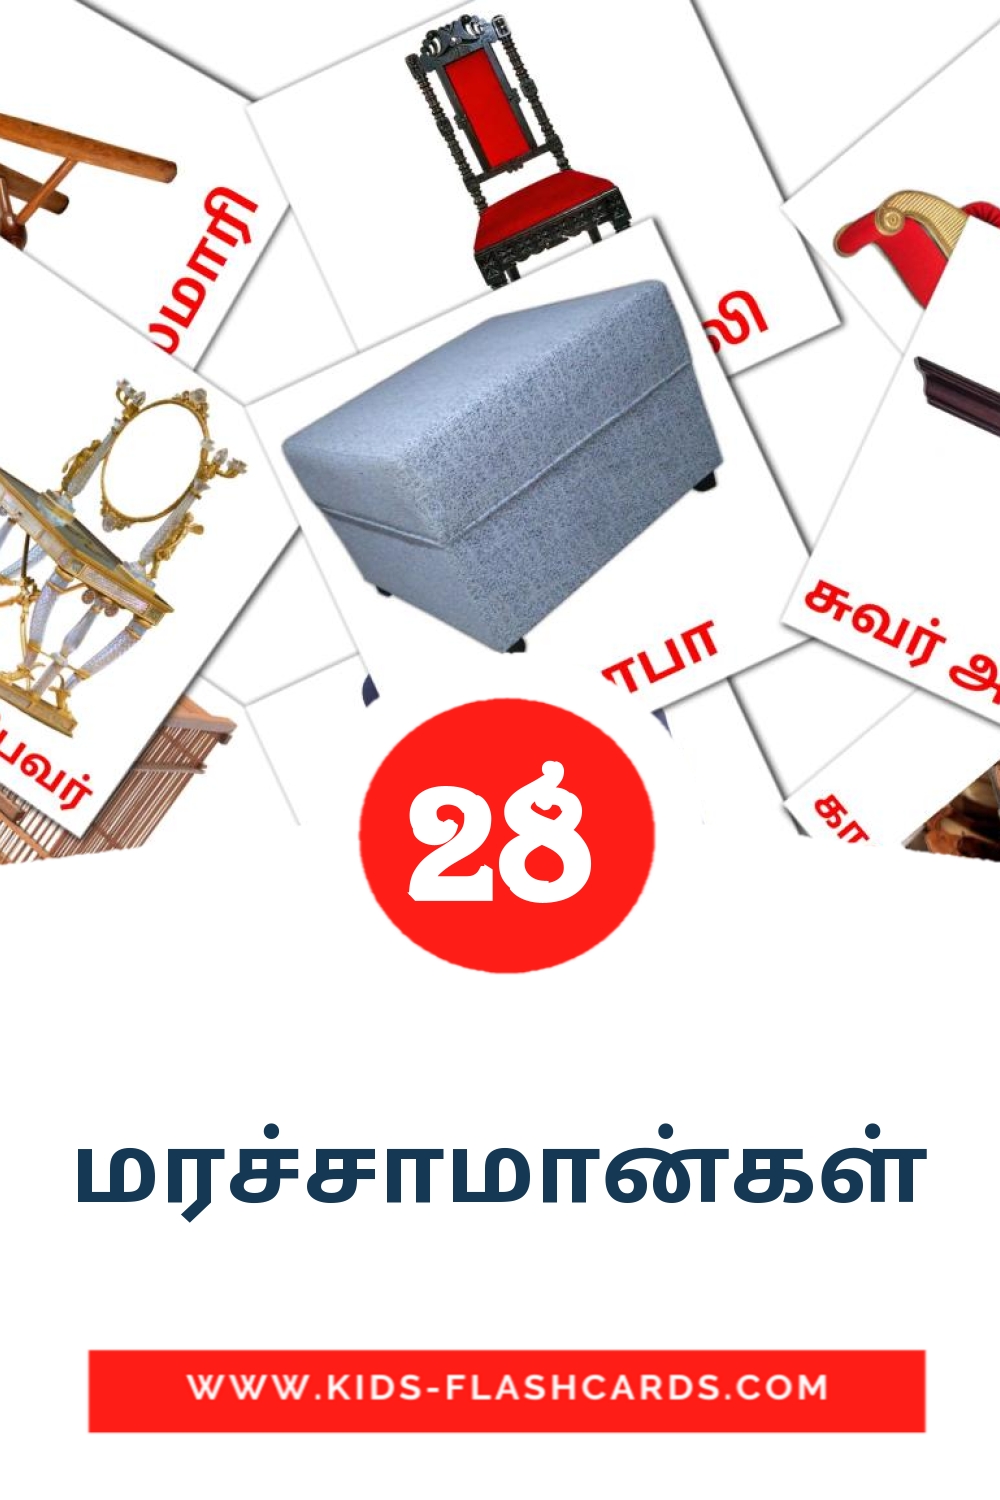 28 carte illustrate di மரச்சாமான்கள் per la scuola materna in tamil